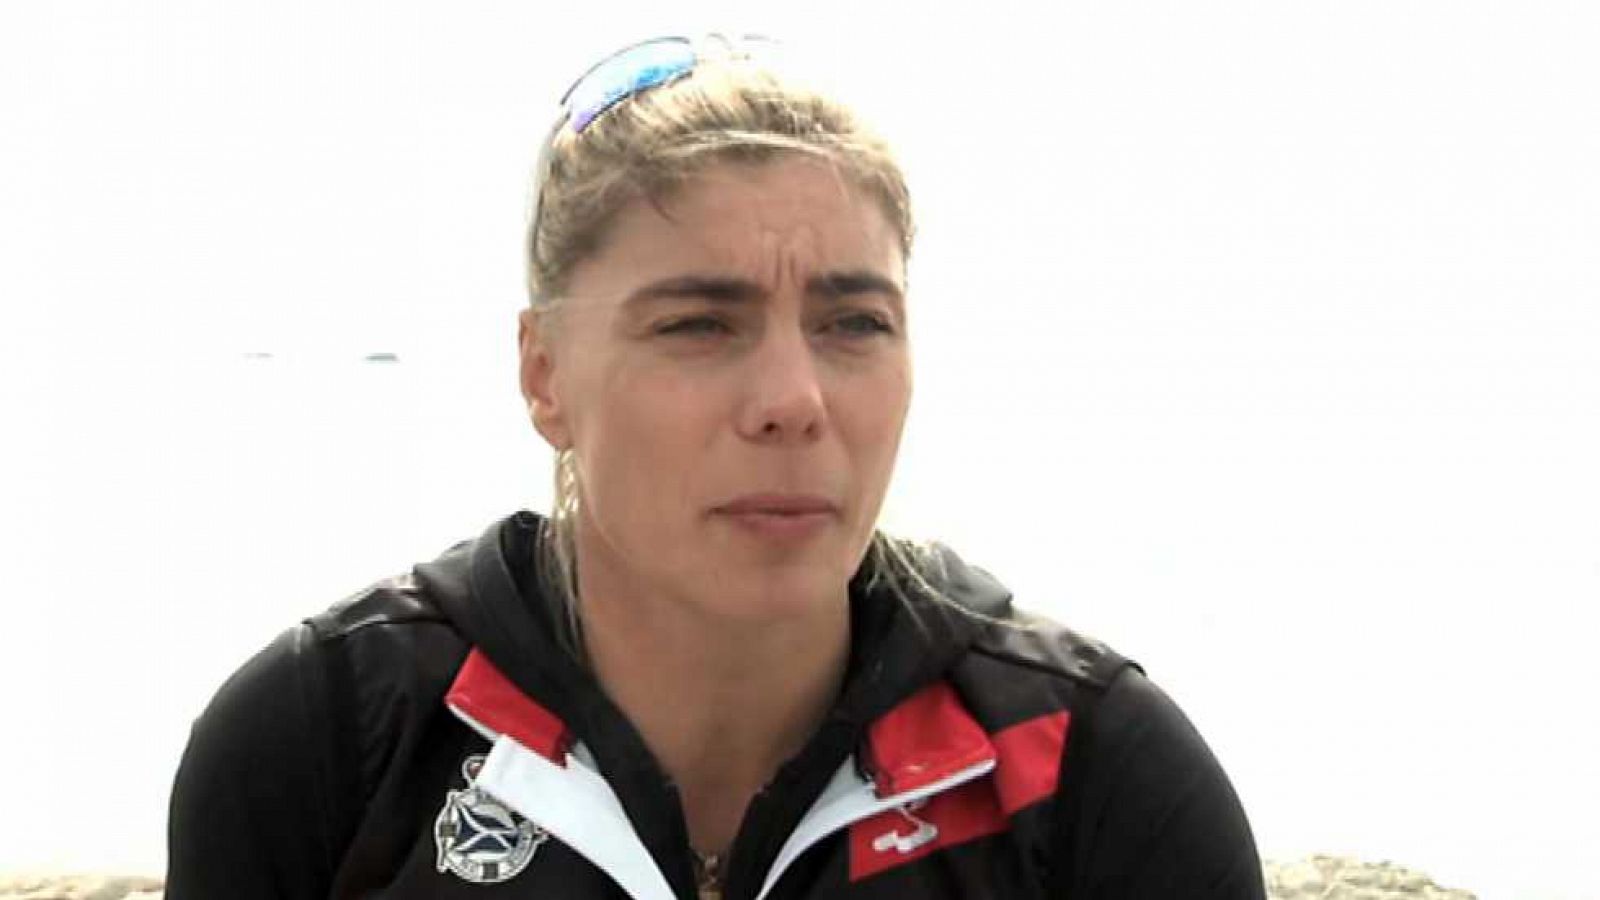 Mujer y deporte - Triatlón: Helena Herrero